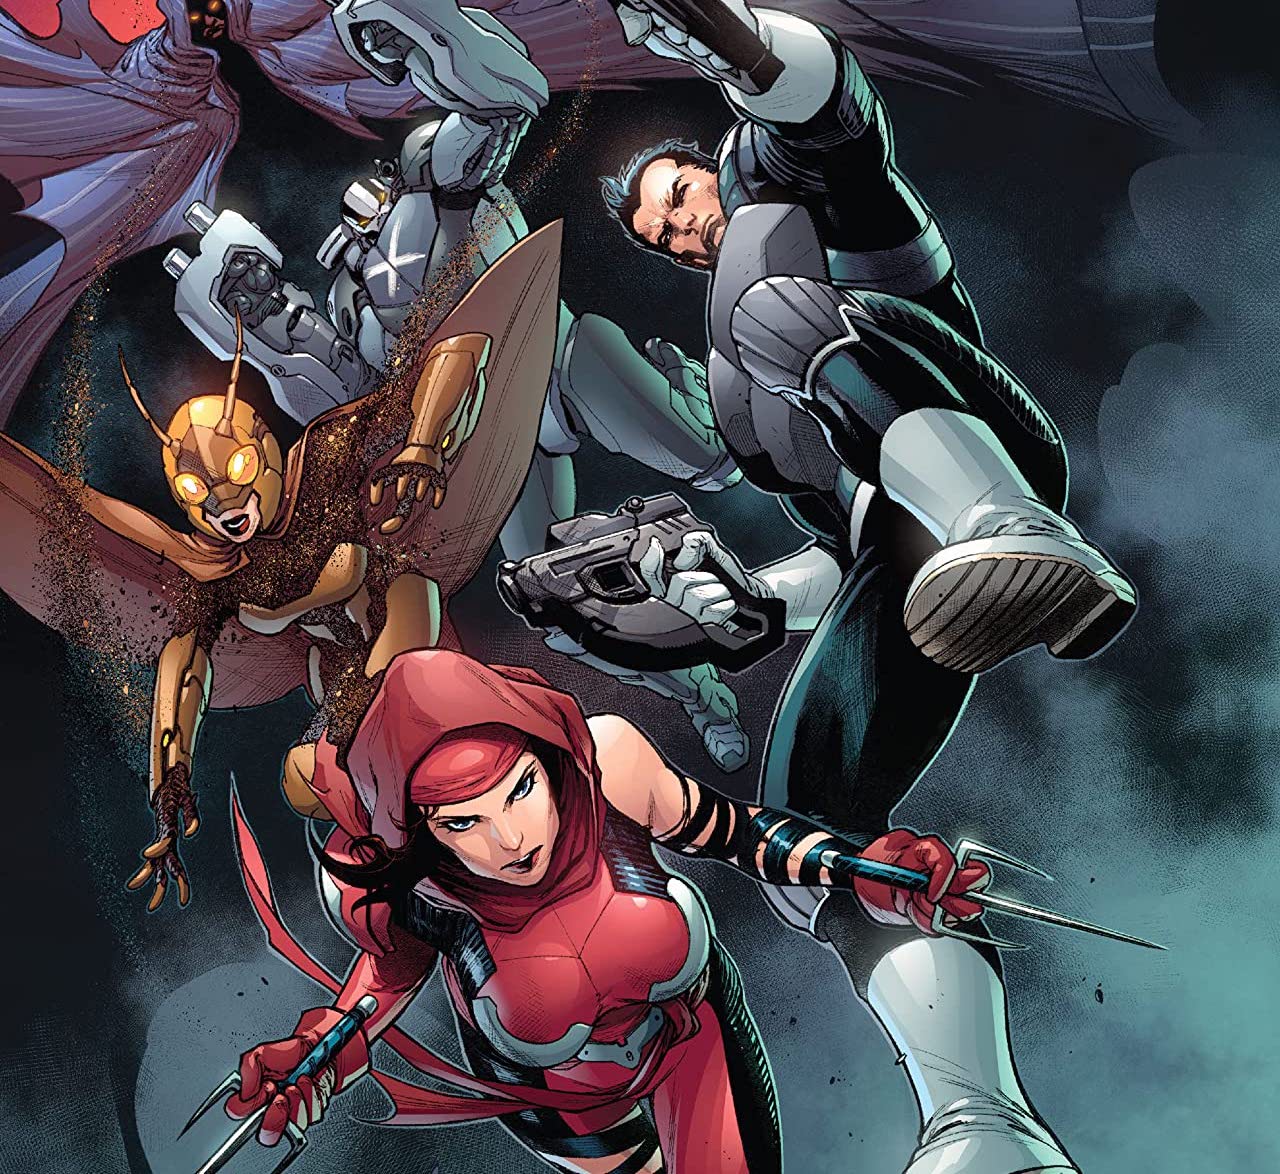 'Heroes Reborn: Squadron Savage' #1 puts a tragic twist on The Punisher